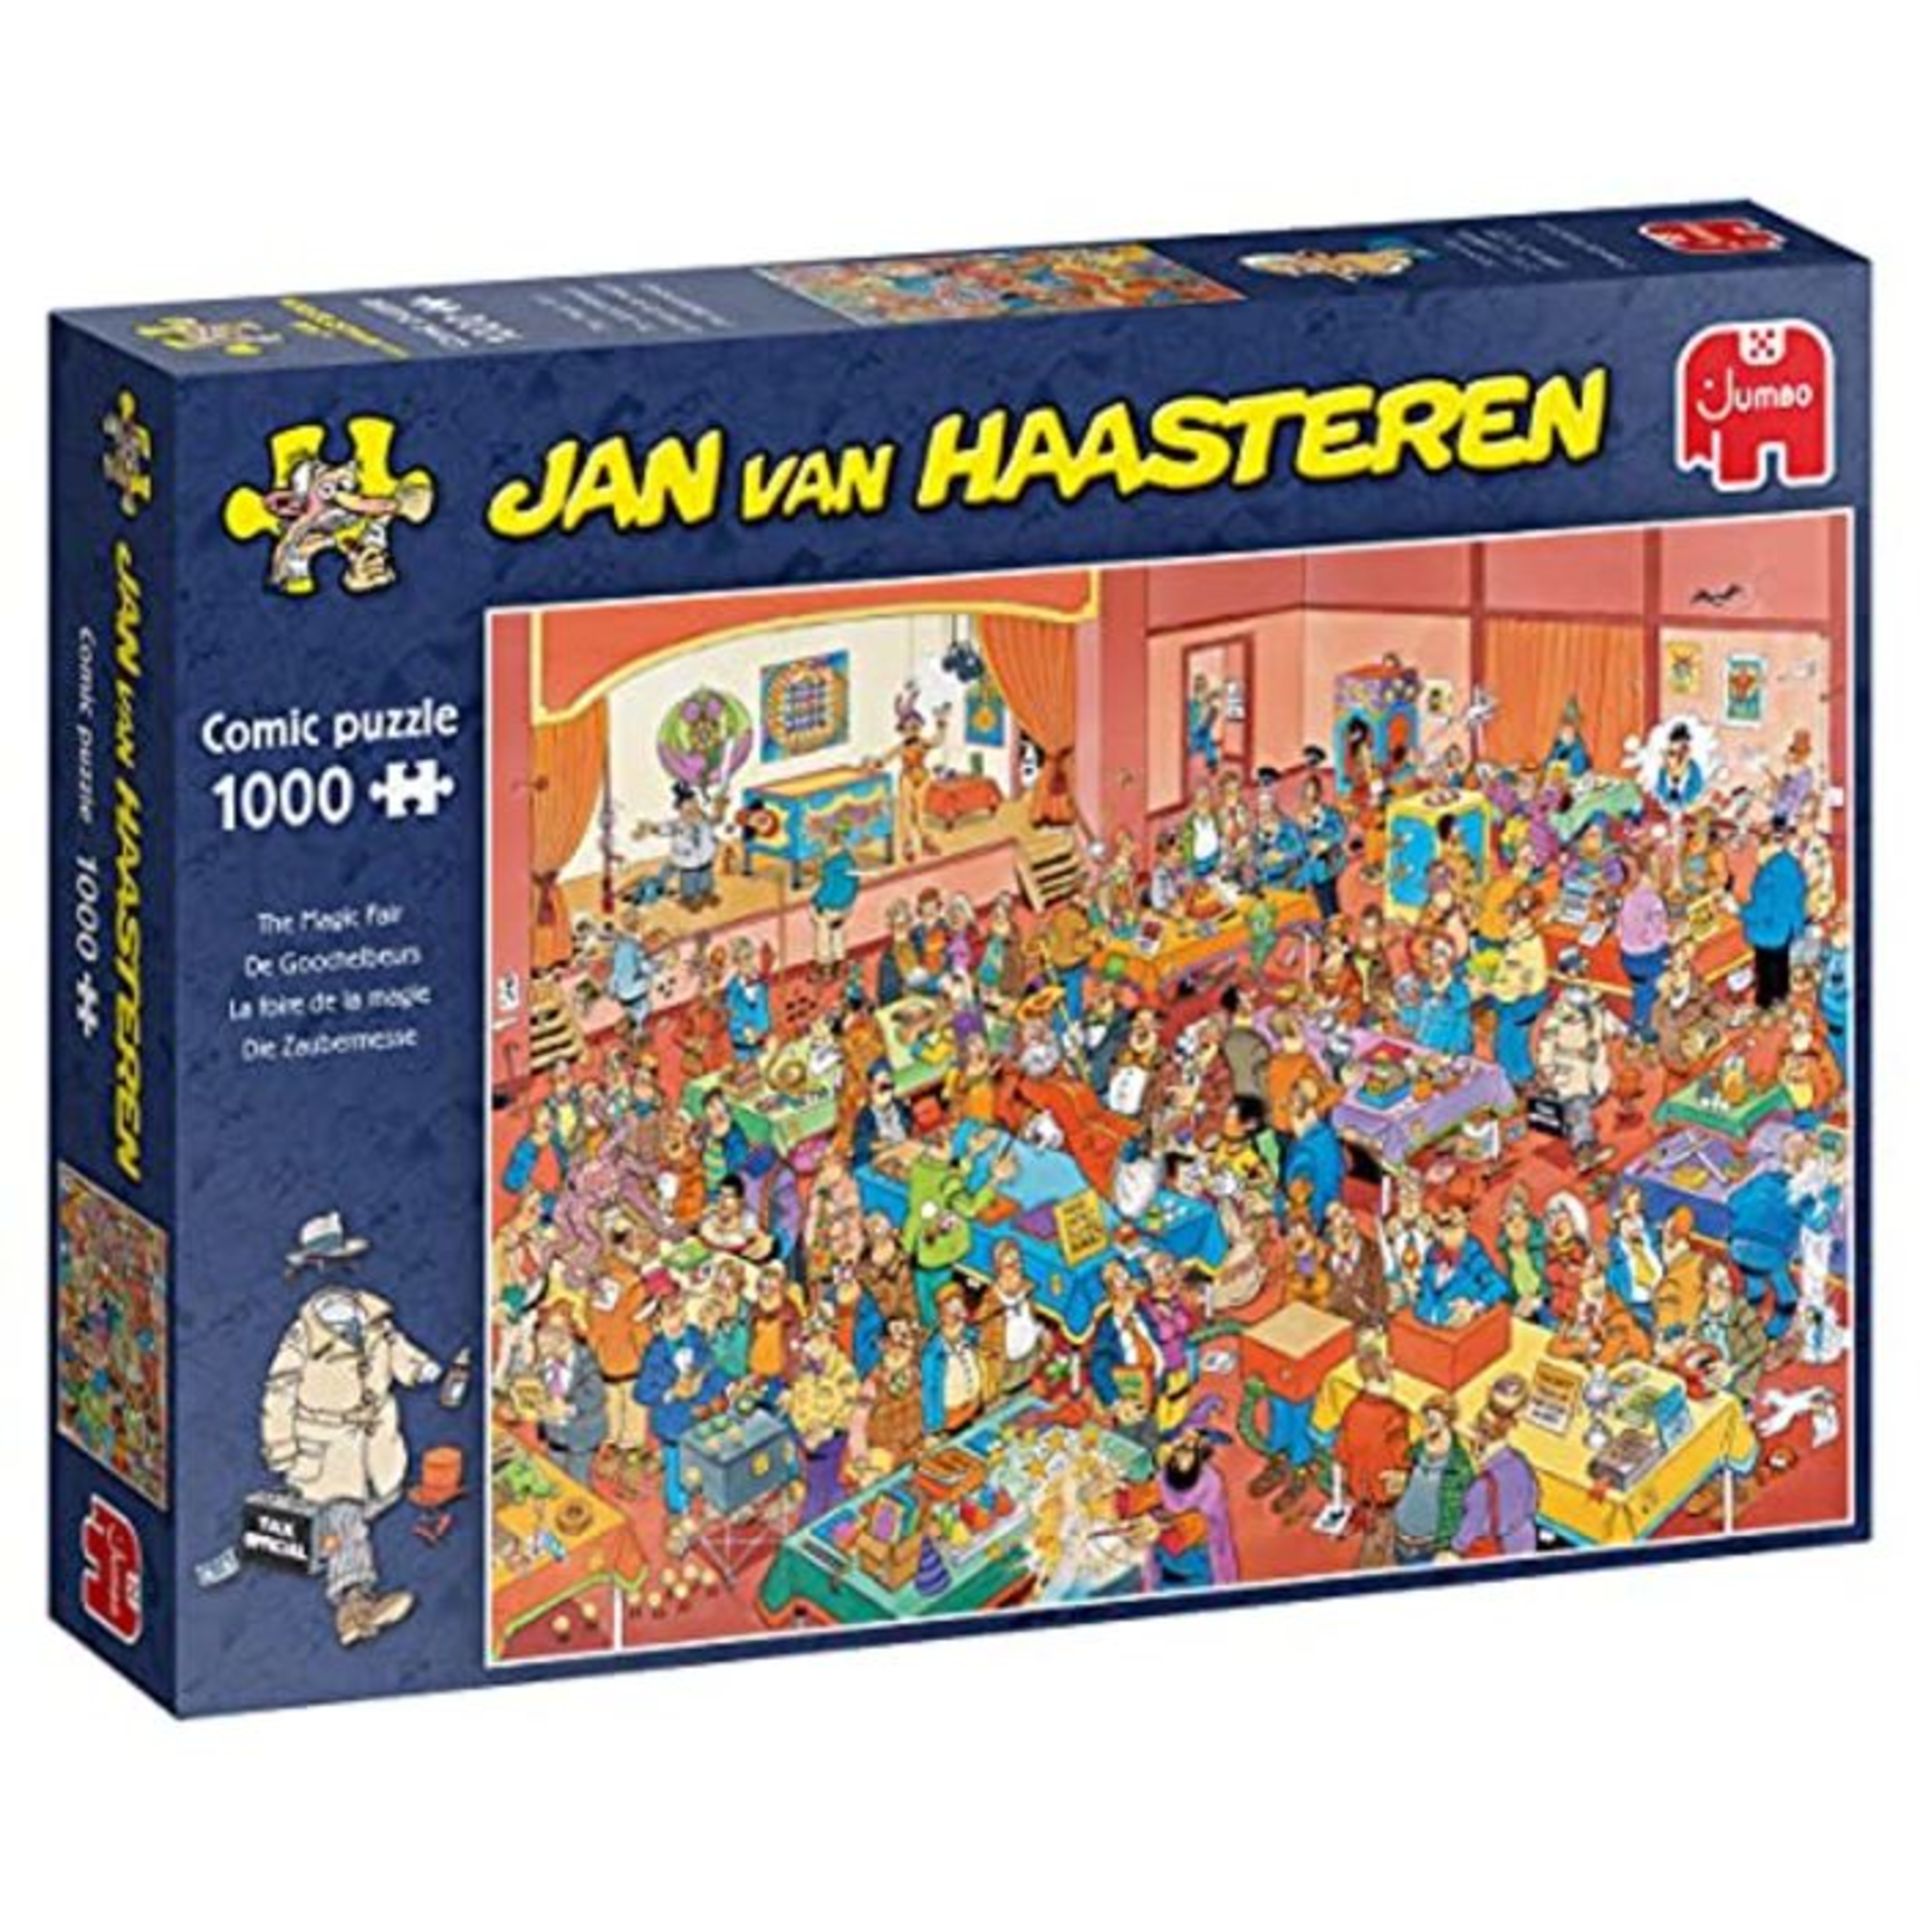 Jumbo, Jan Van Haasteren - The Magic Fair, Jigsaw Puzzles for Adults, 1,000 piece